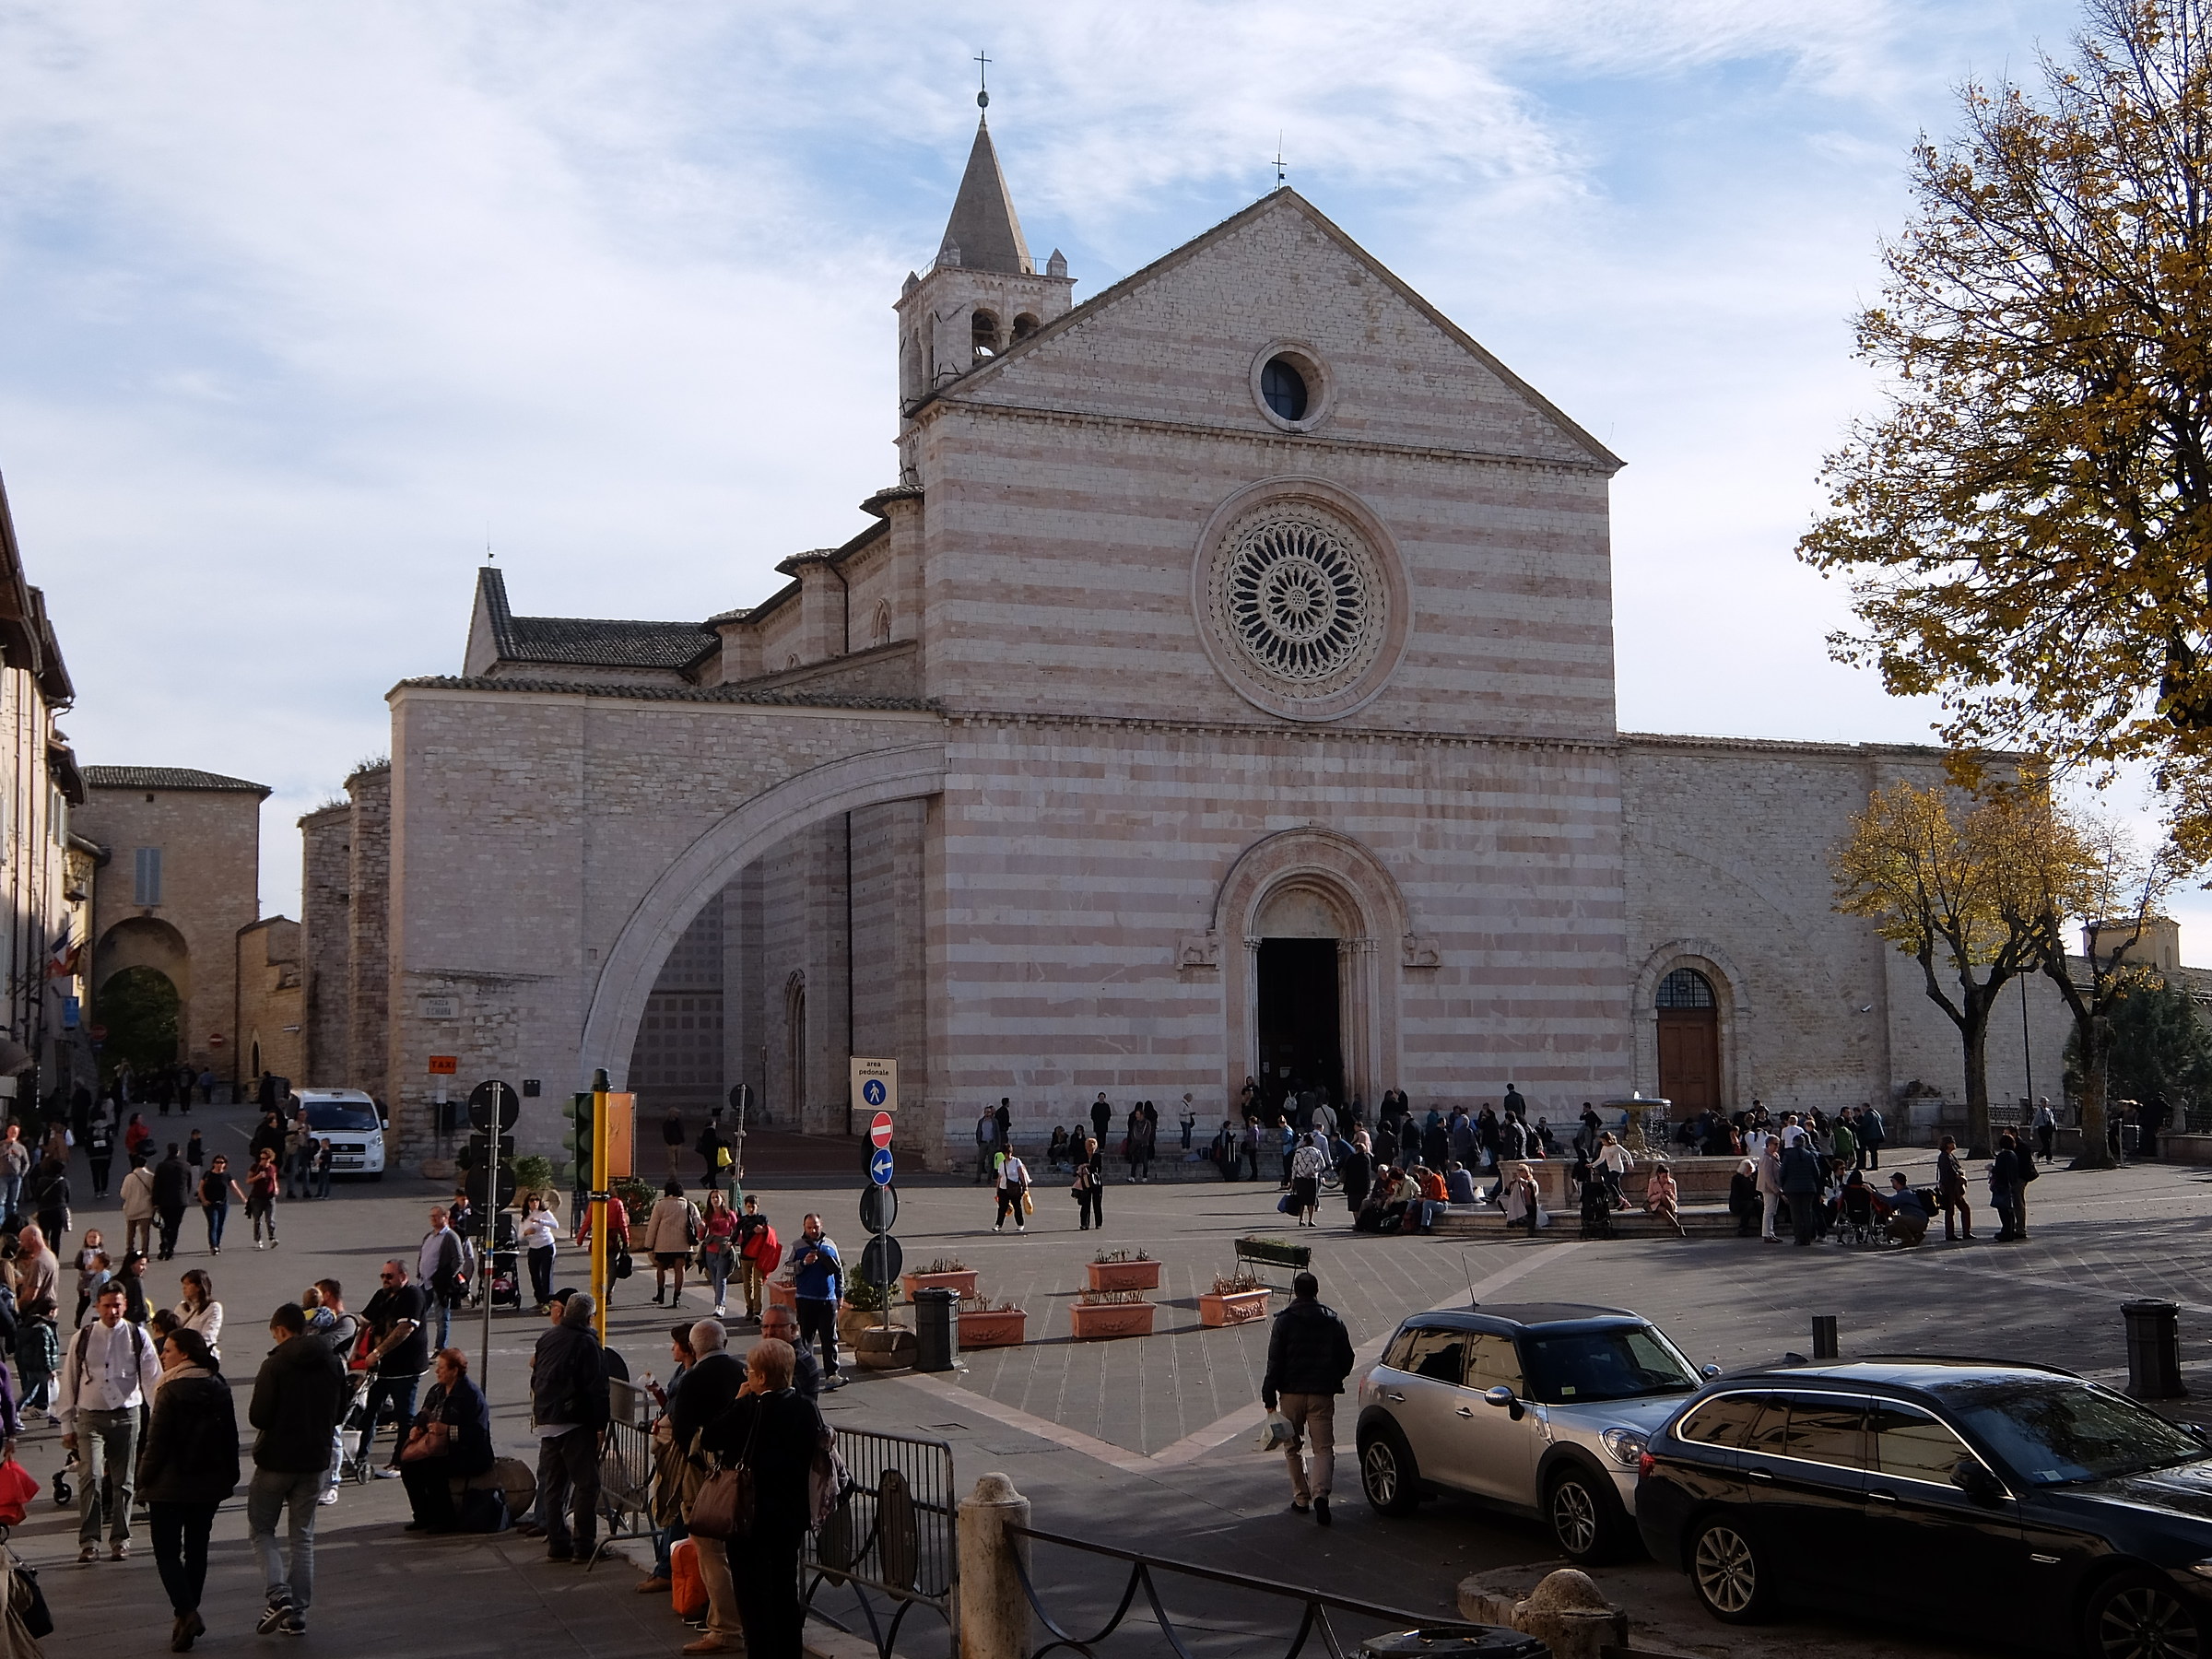 Urban visions of Assisi 1...